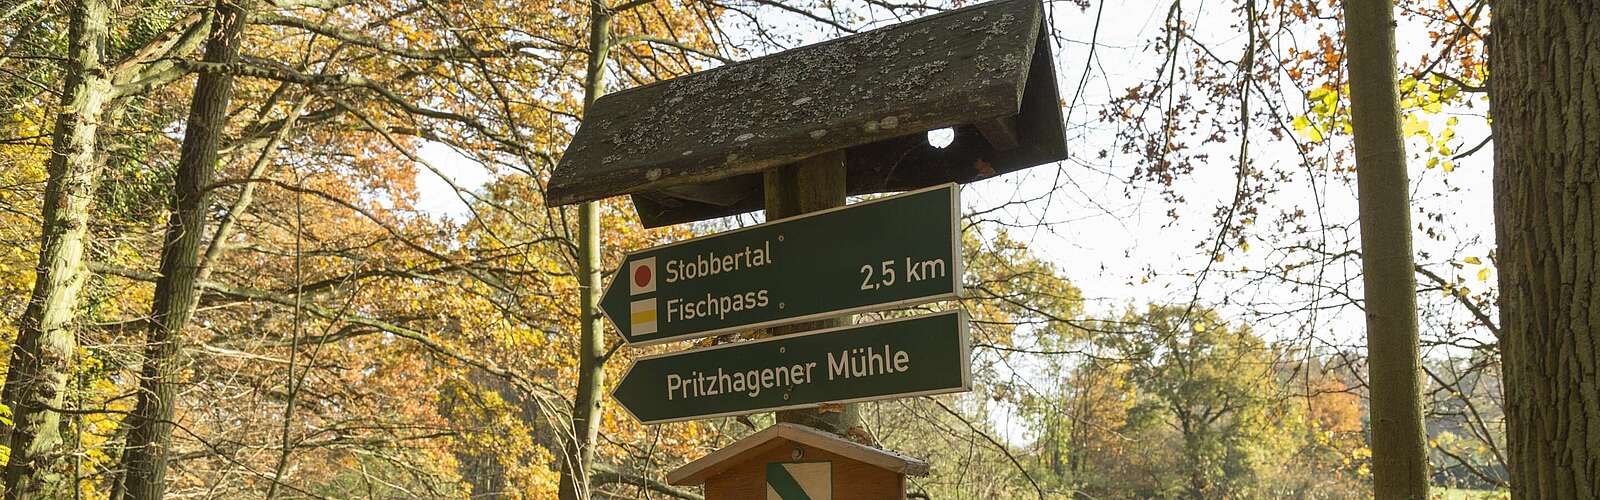 Naturparkroute Märkische Schweiz,
        
    

        Foto: TMB-Fotoarchiv/Steffen Lehmann